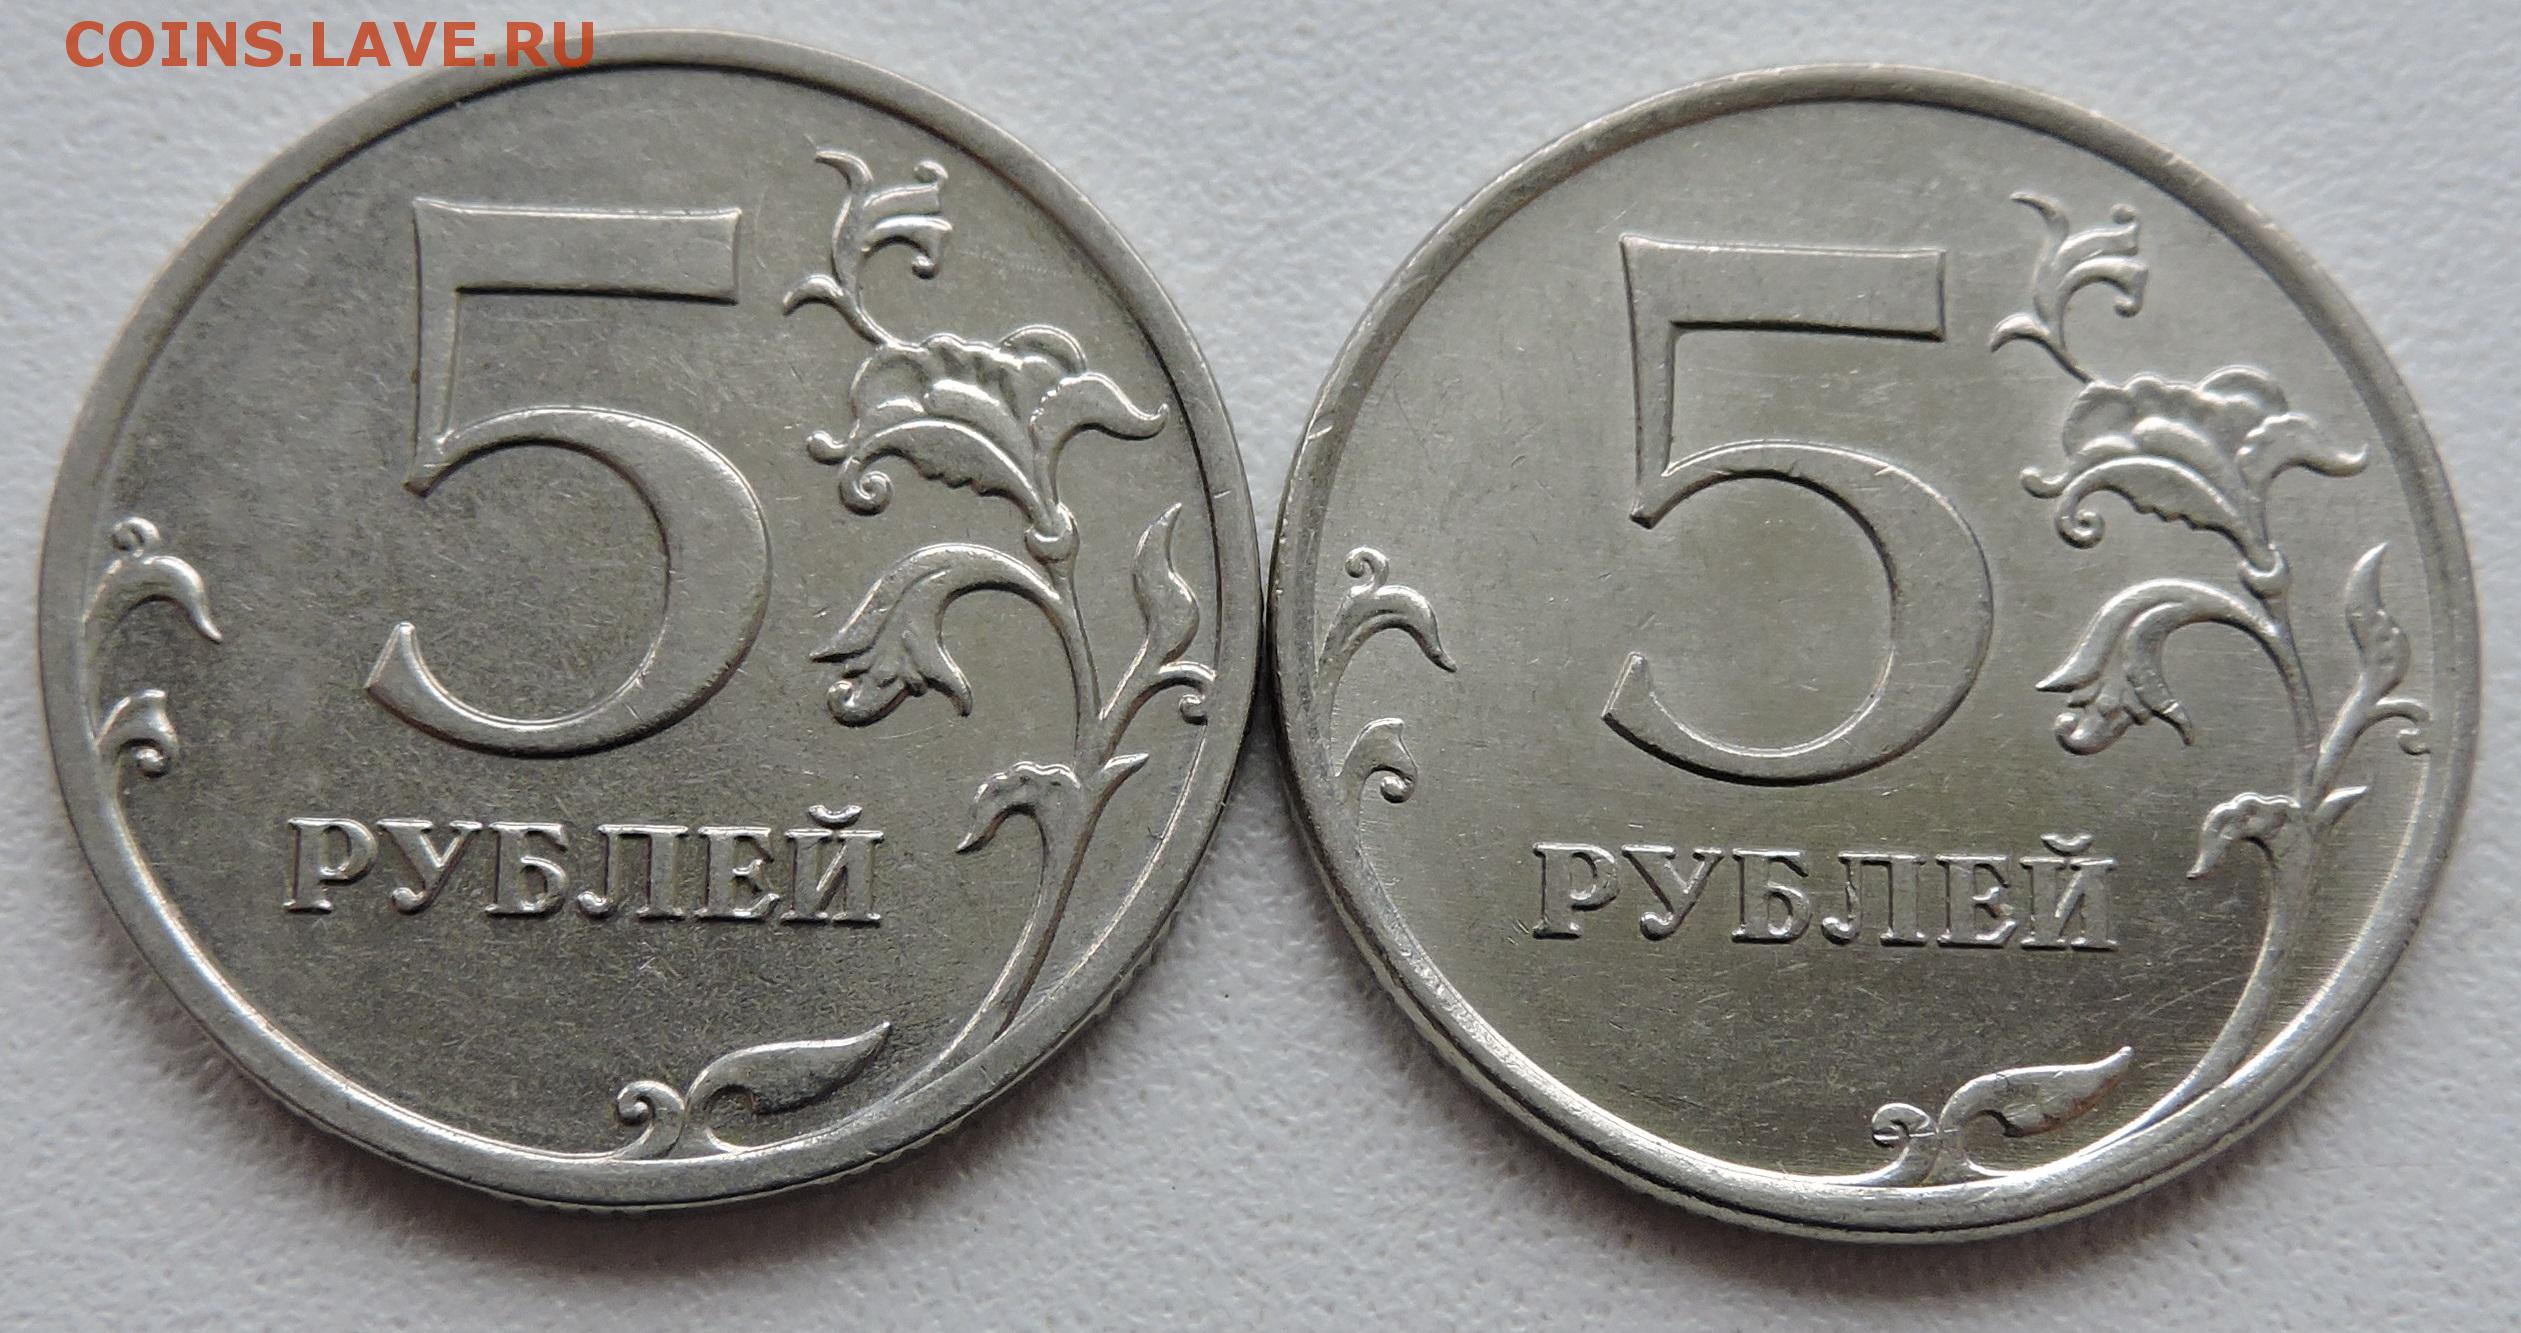 5 рублей 80 года. 5 Рублей 1998 ММД шт.а1 и шт.а2. 5 Рублей 2008 ММД. Монета 5 рублей 1998 ММД XF. 5 Рублей 2008 СПМД.